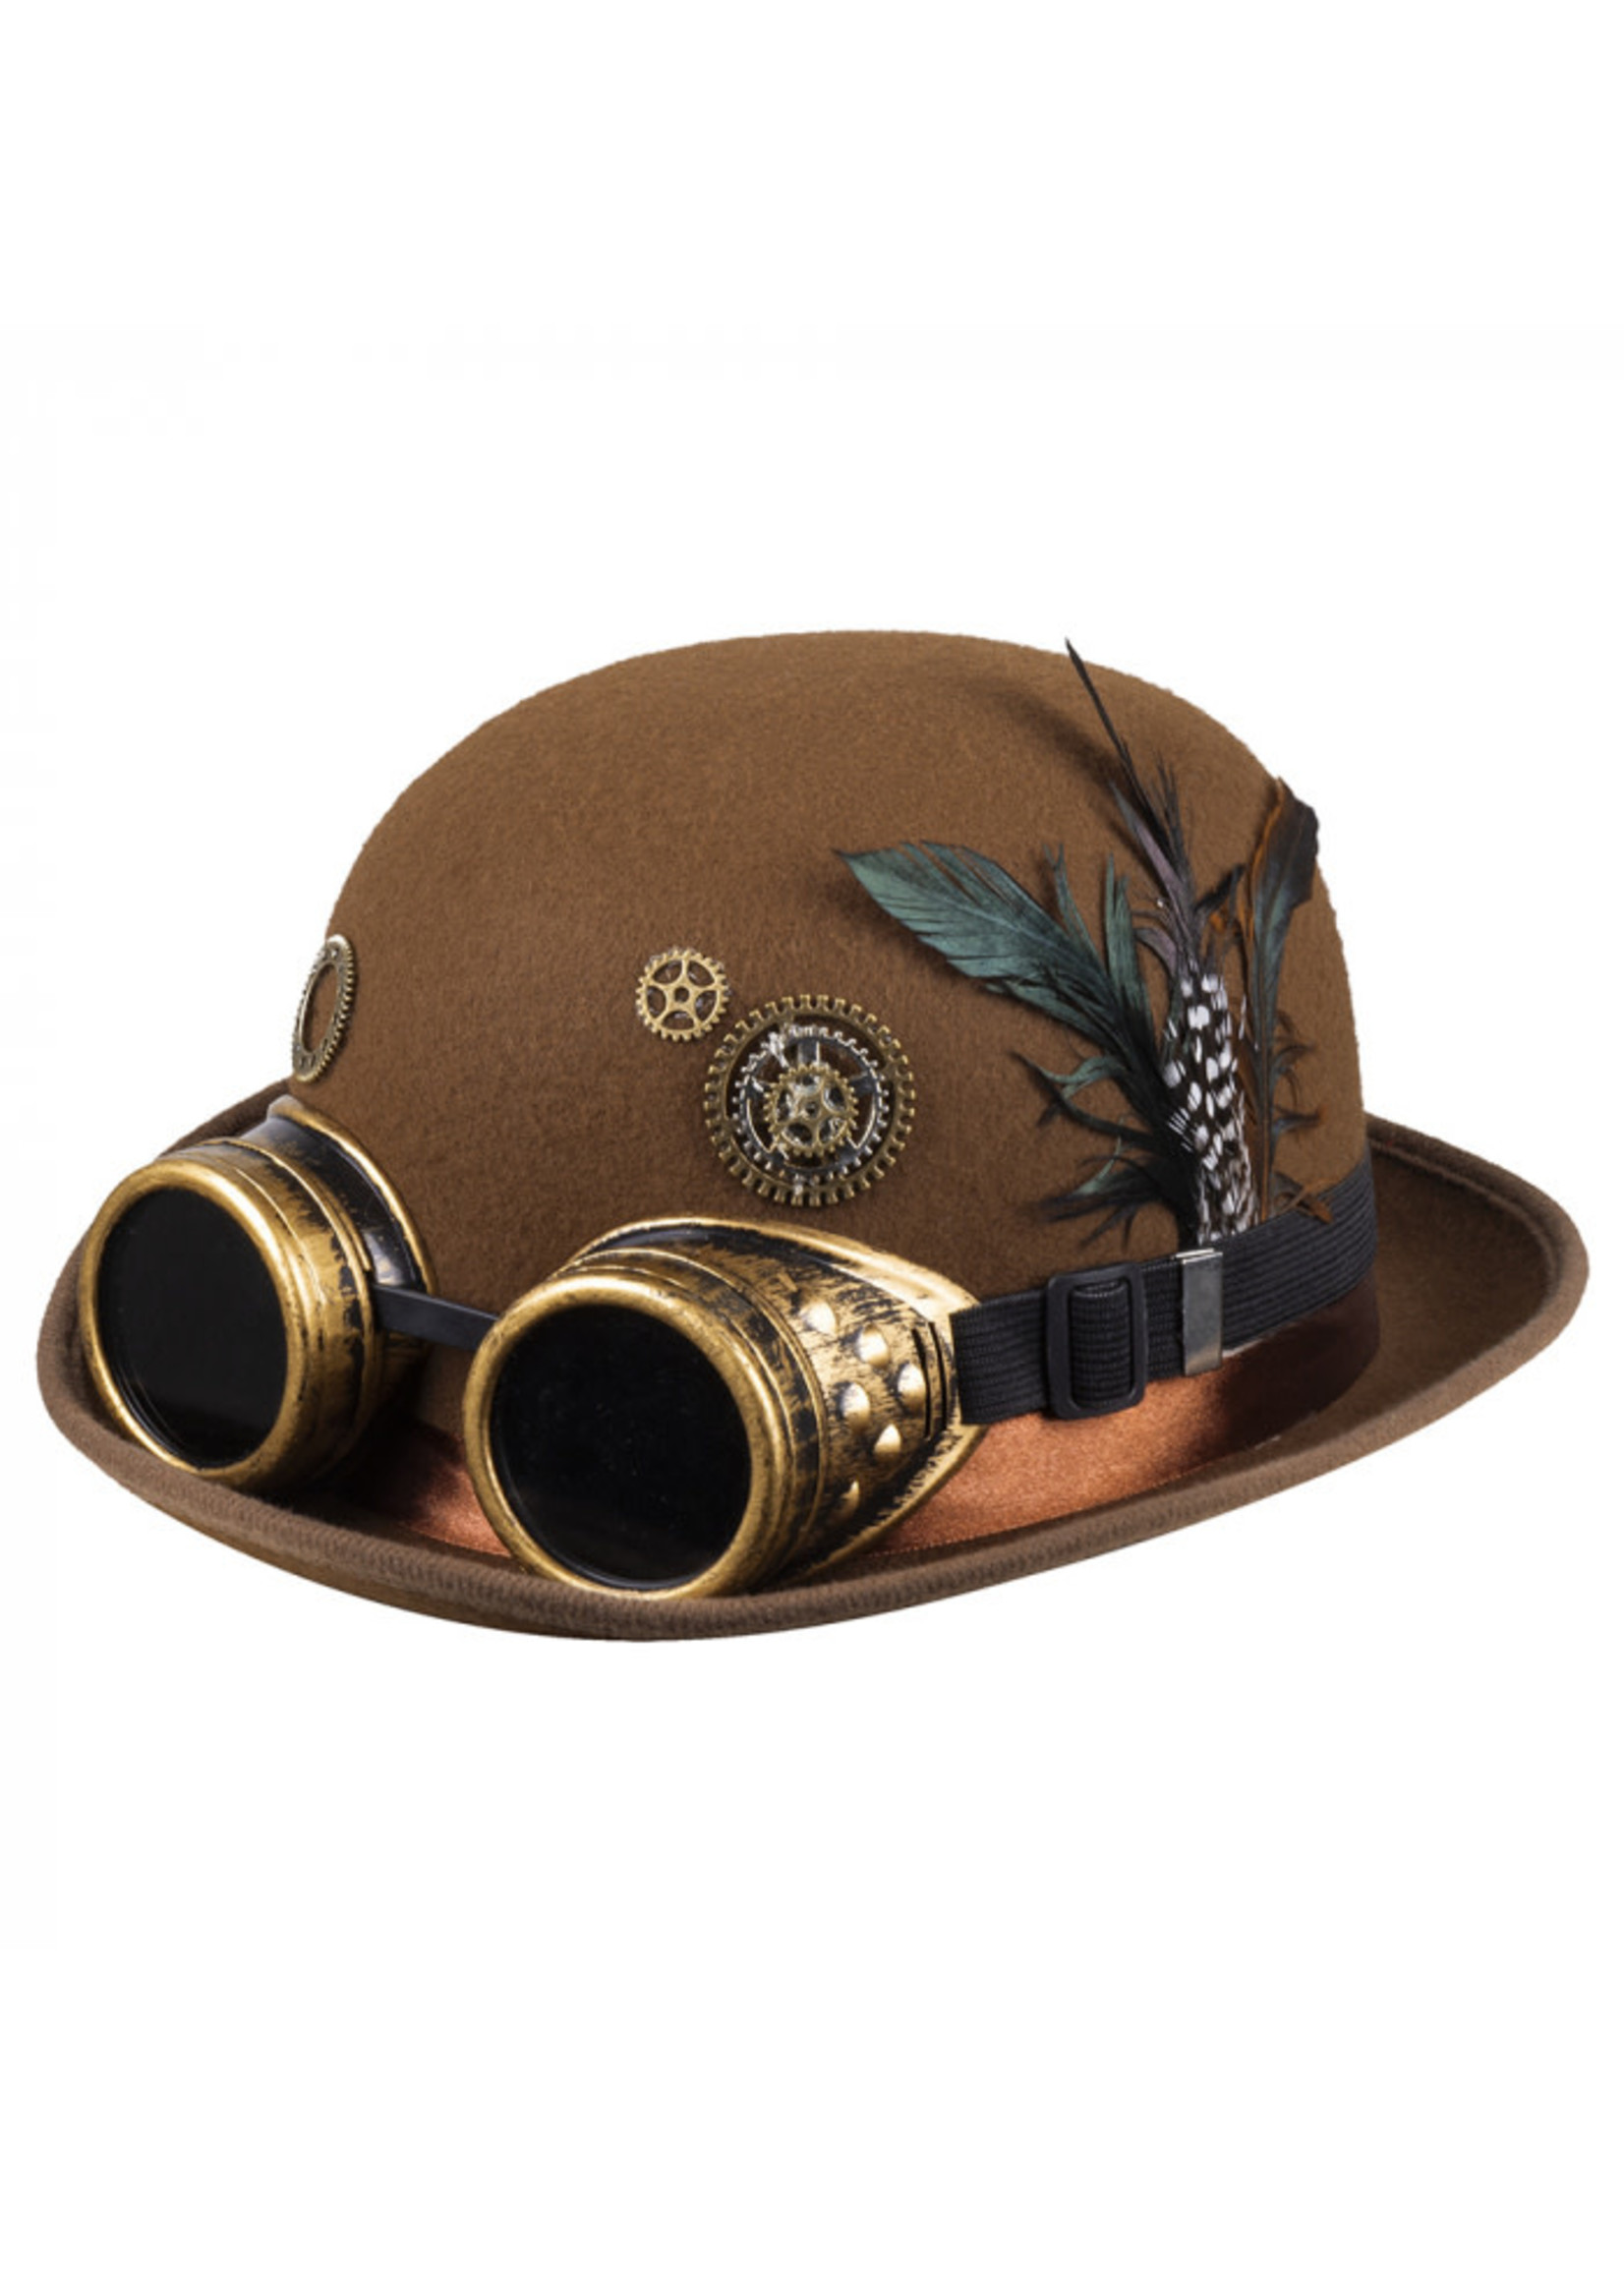 Feestkleding Breda Steampunk hoed